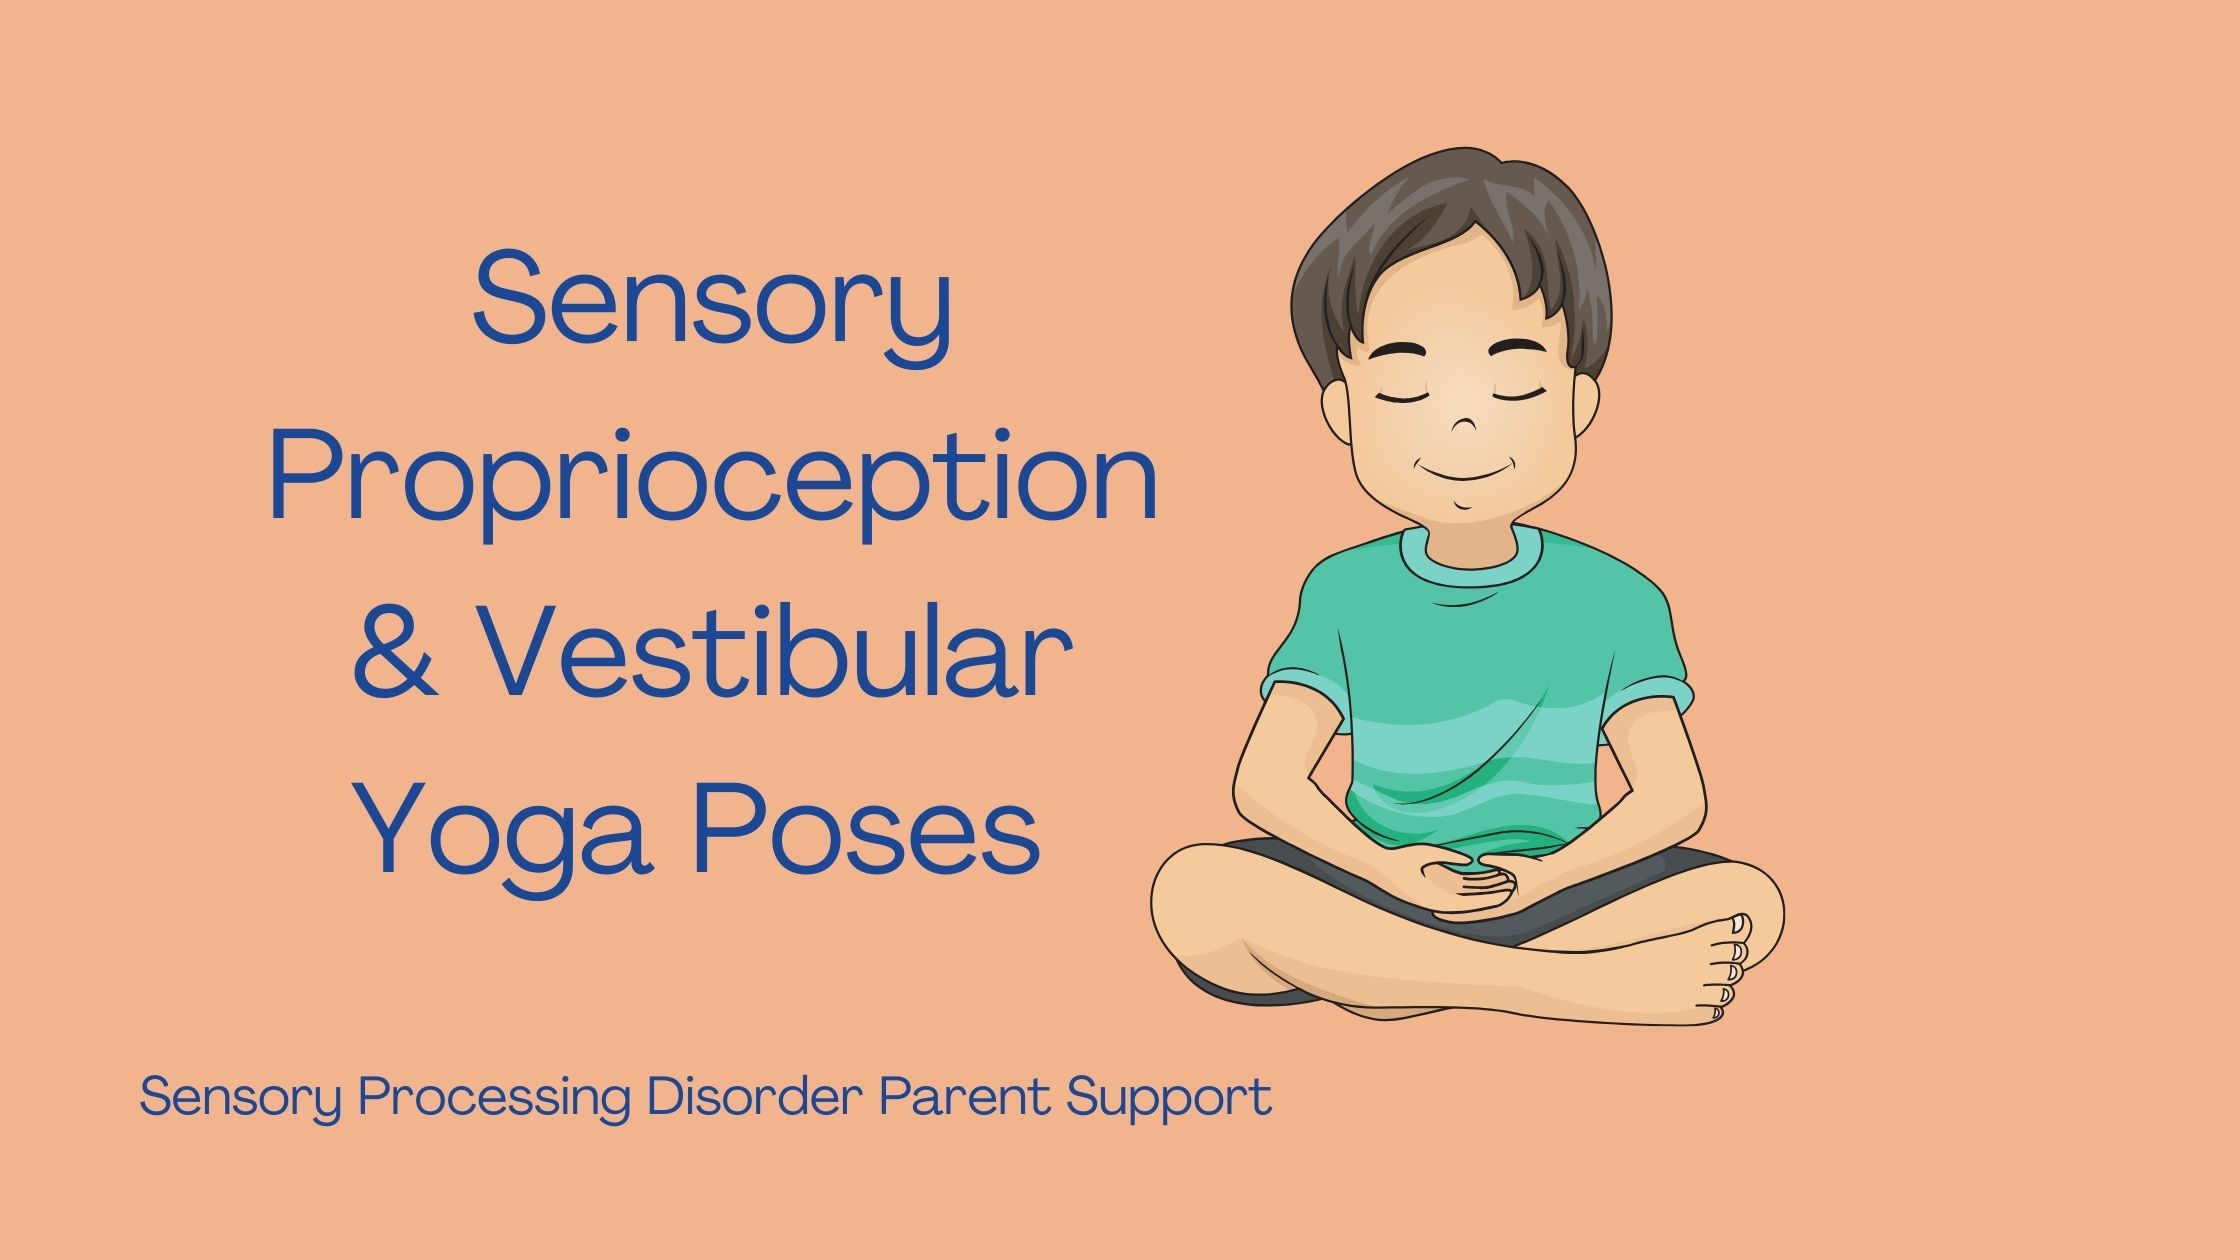 child with sensory processing disorder being mindful and practicing yoga Sensory Proprioception & Vestibular Yoga Poses